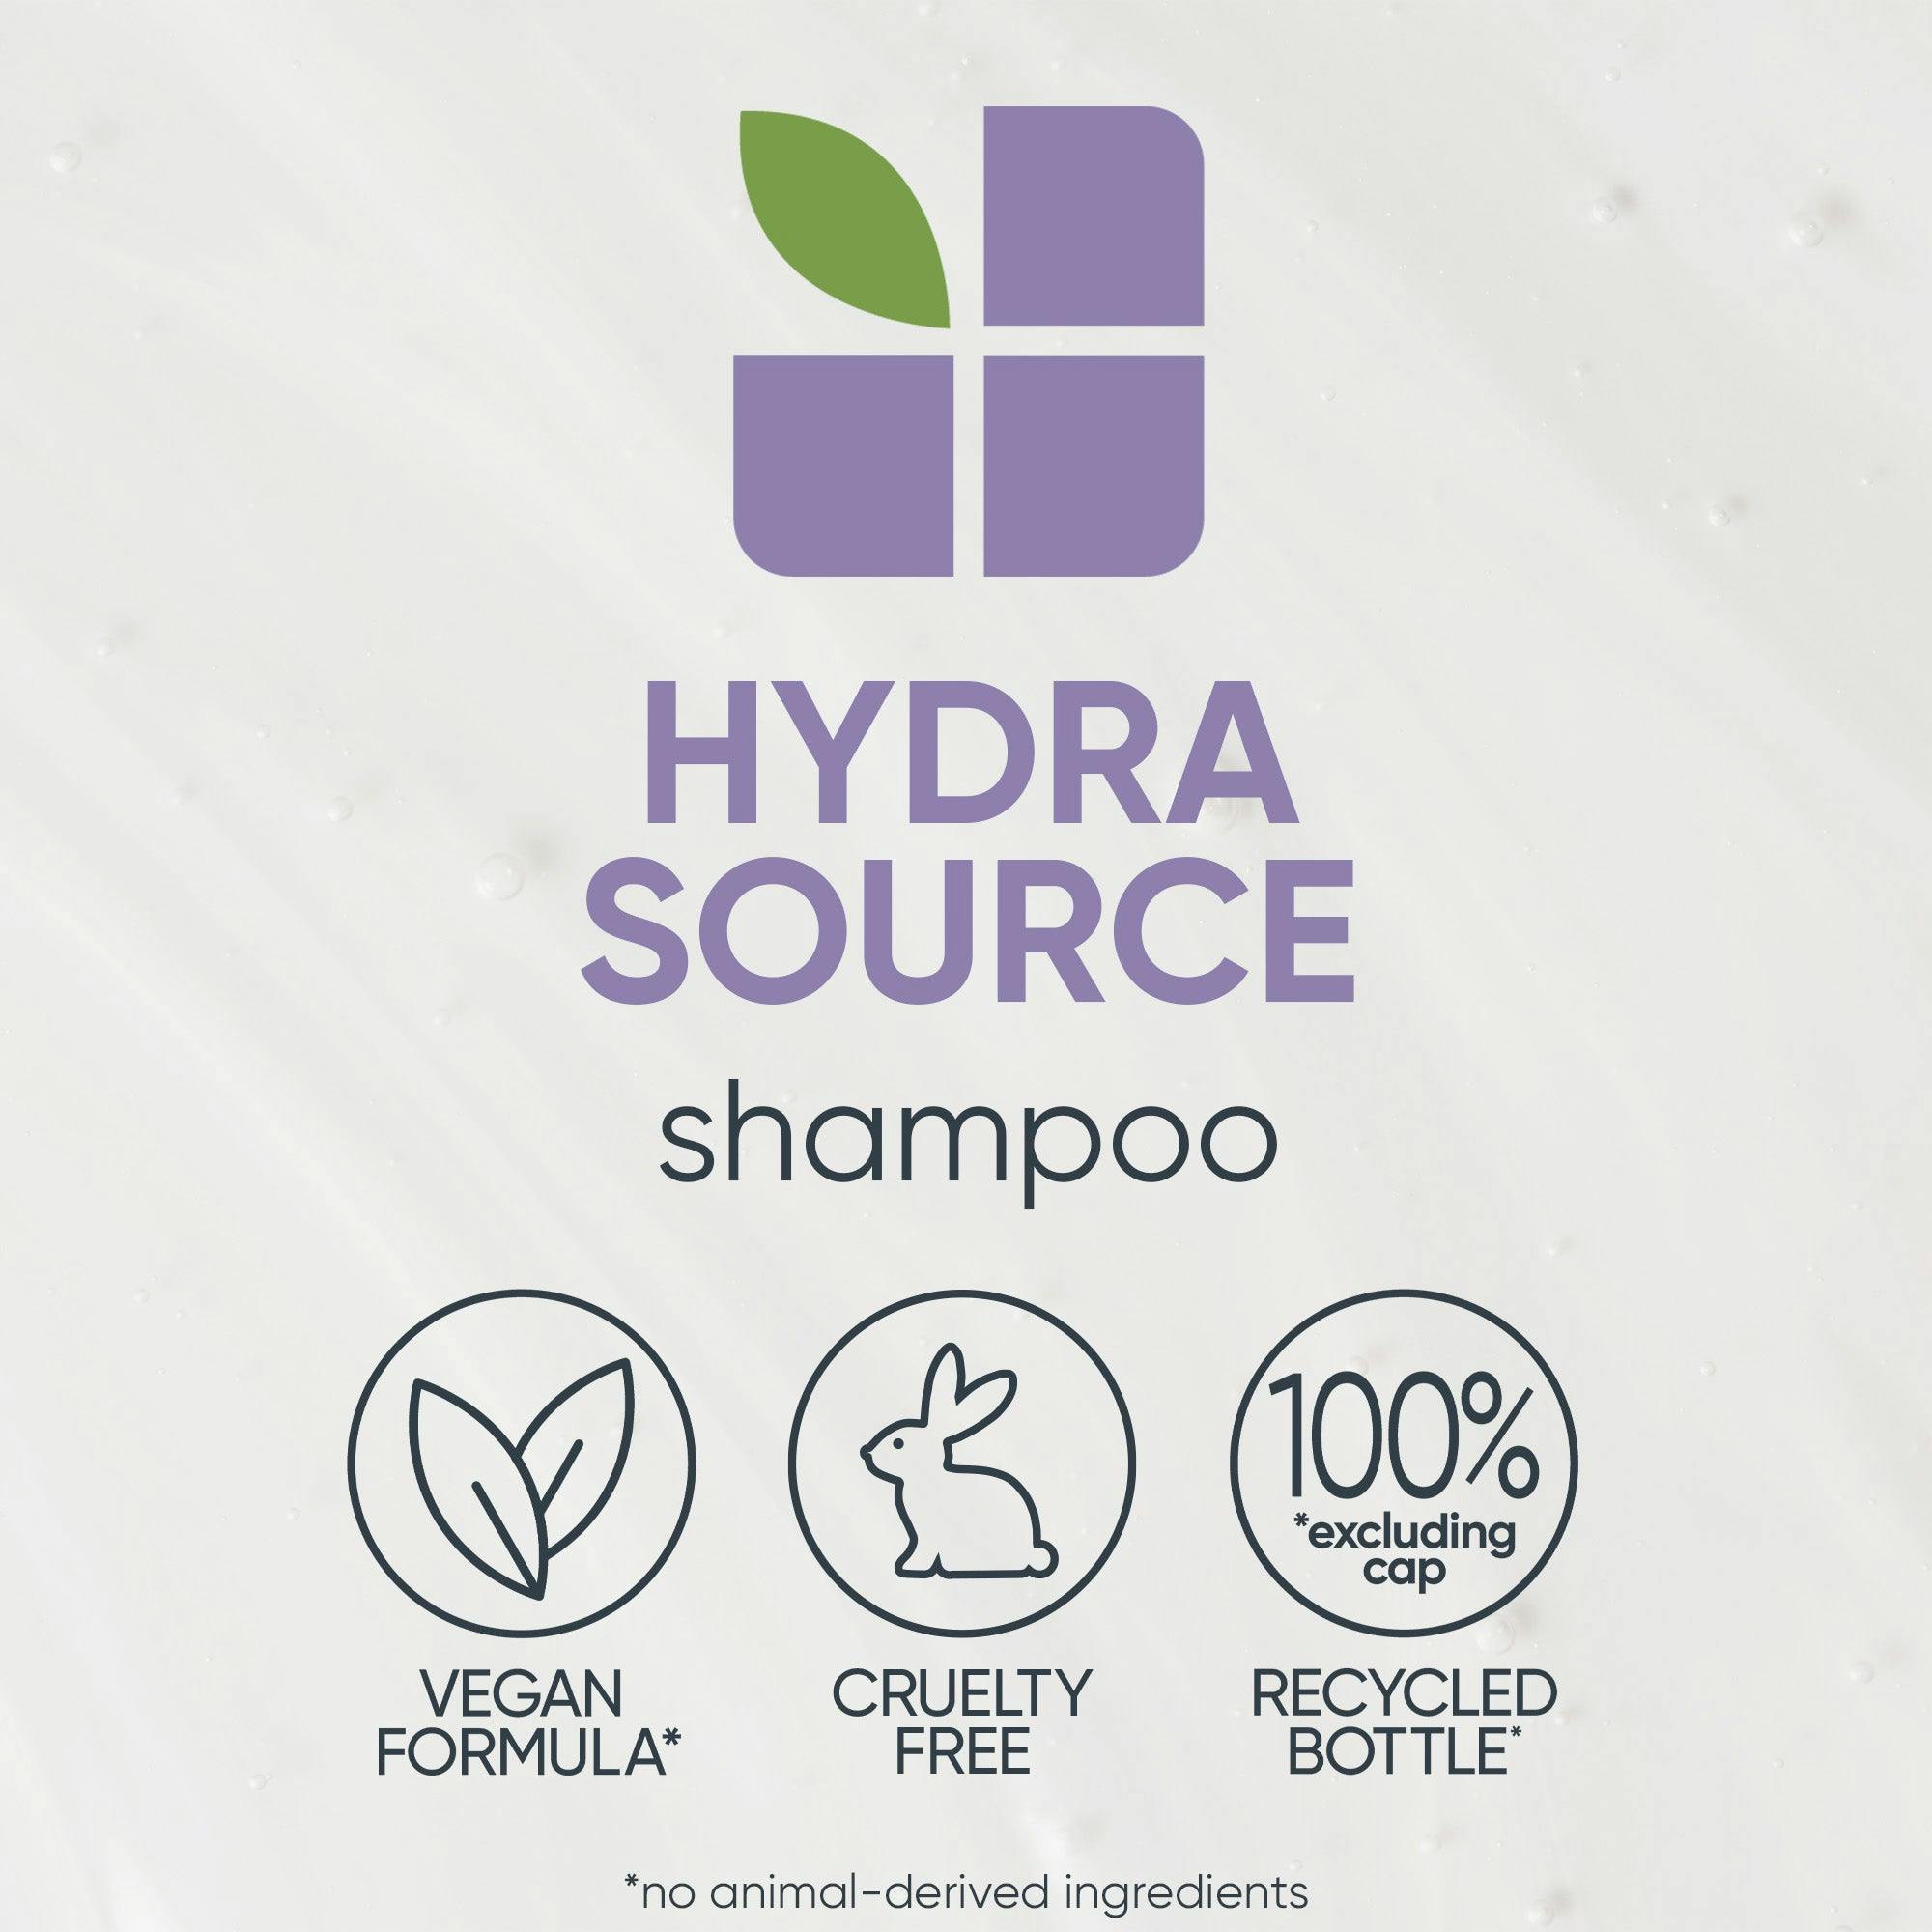 Biolage Hydrasource Shampoo 400ml